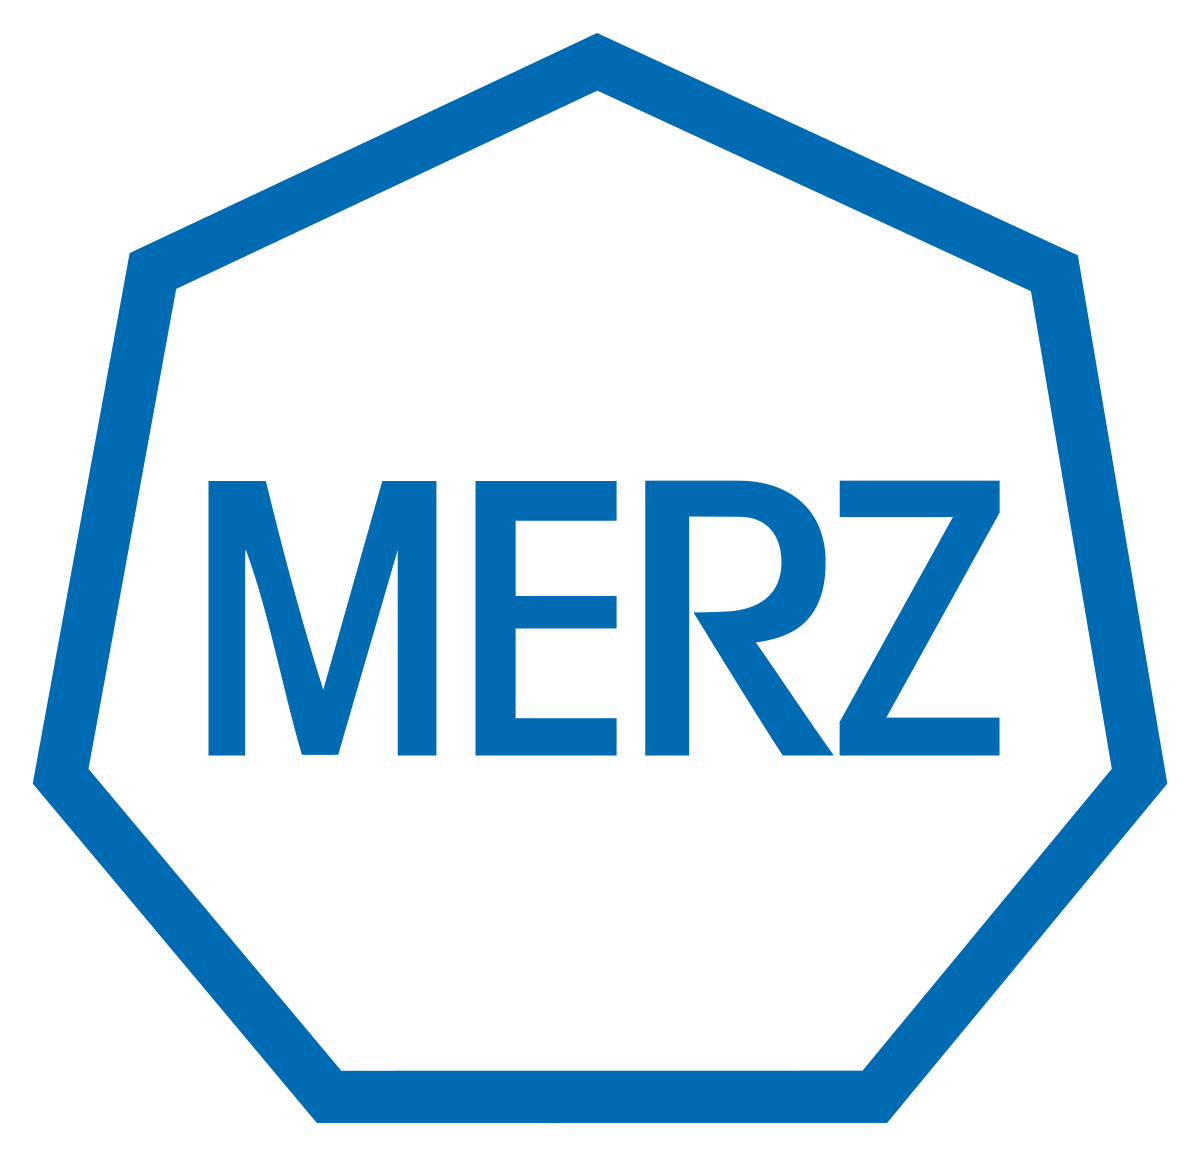 Merz_Pharma_logo.svg